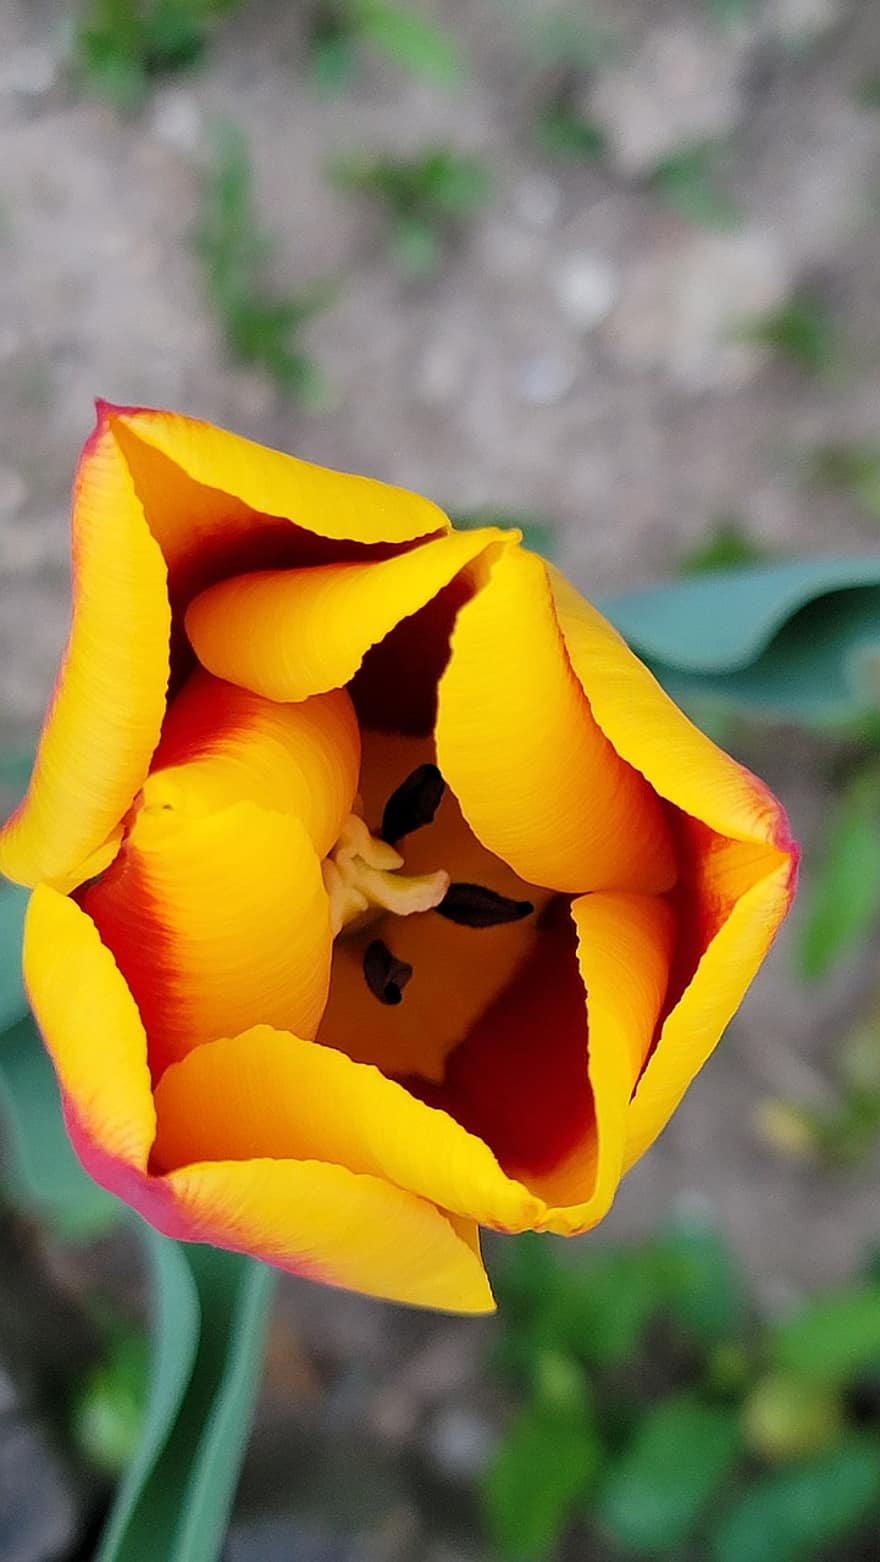 tulipan, blomst, anlegg, hage tulipan, oransje tulipan, oransje blomst, petals, vår, natur